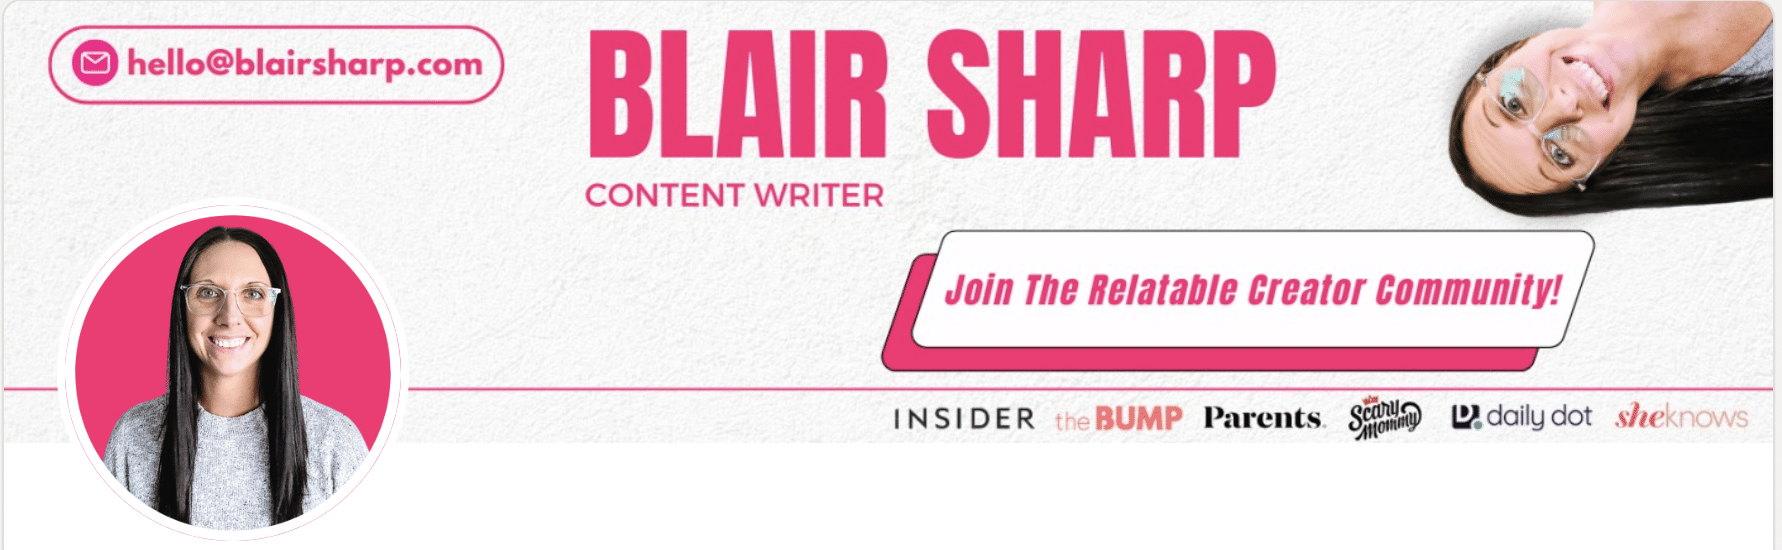 blair sharp linkedin profile